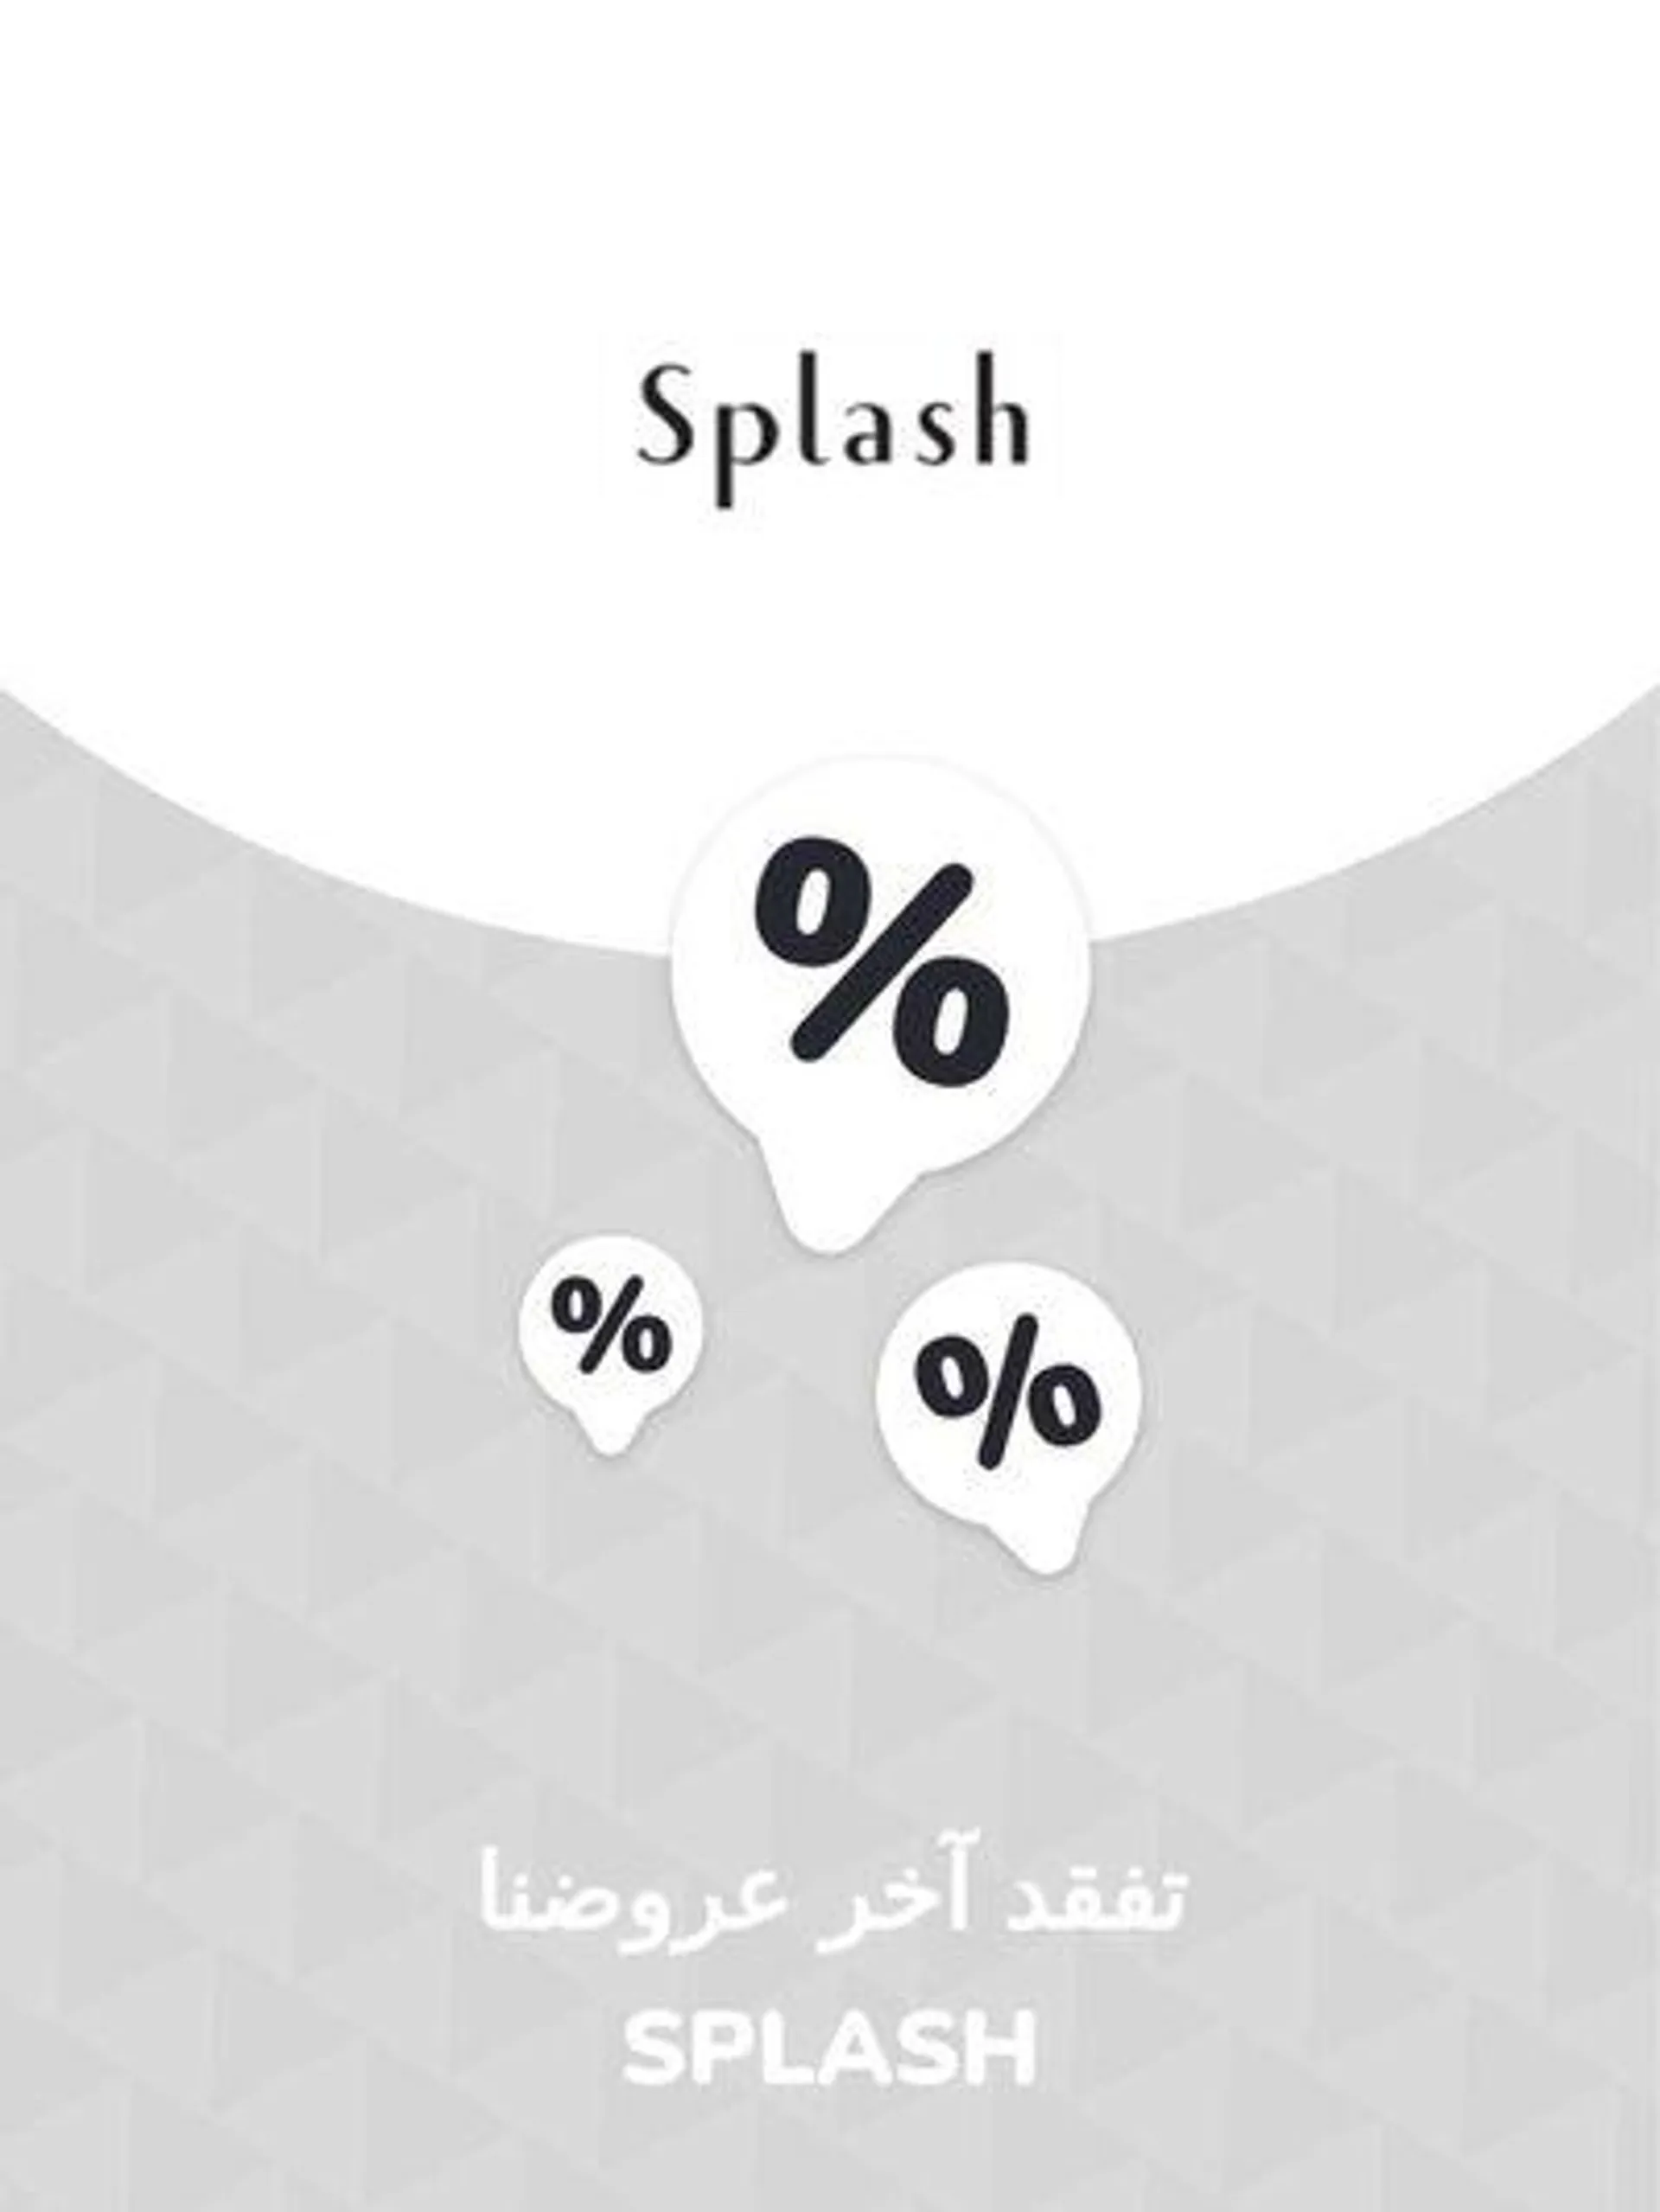 Offers Splash - 1